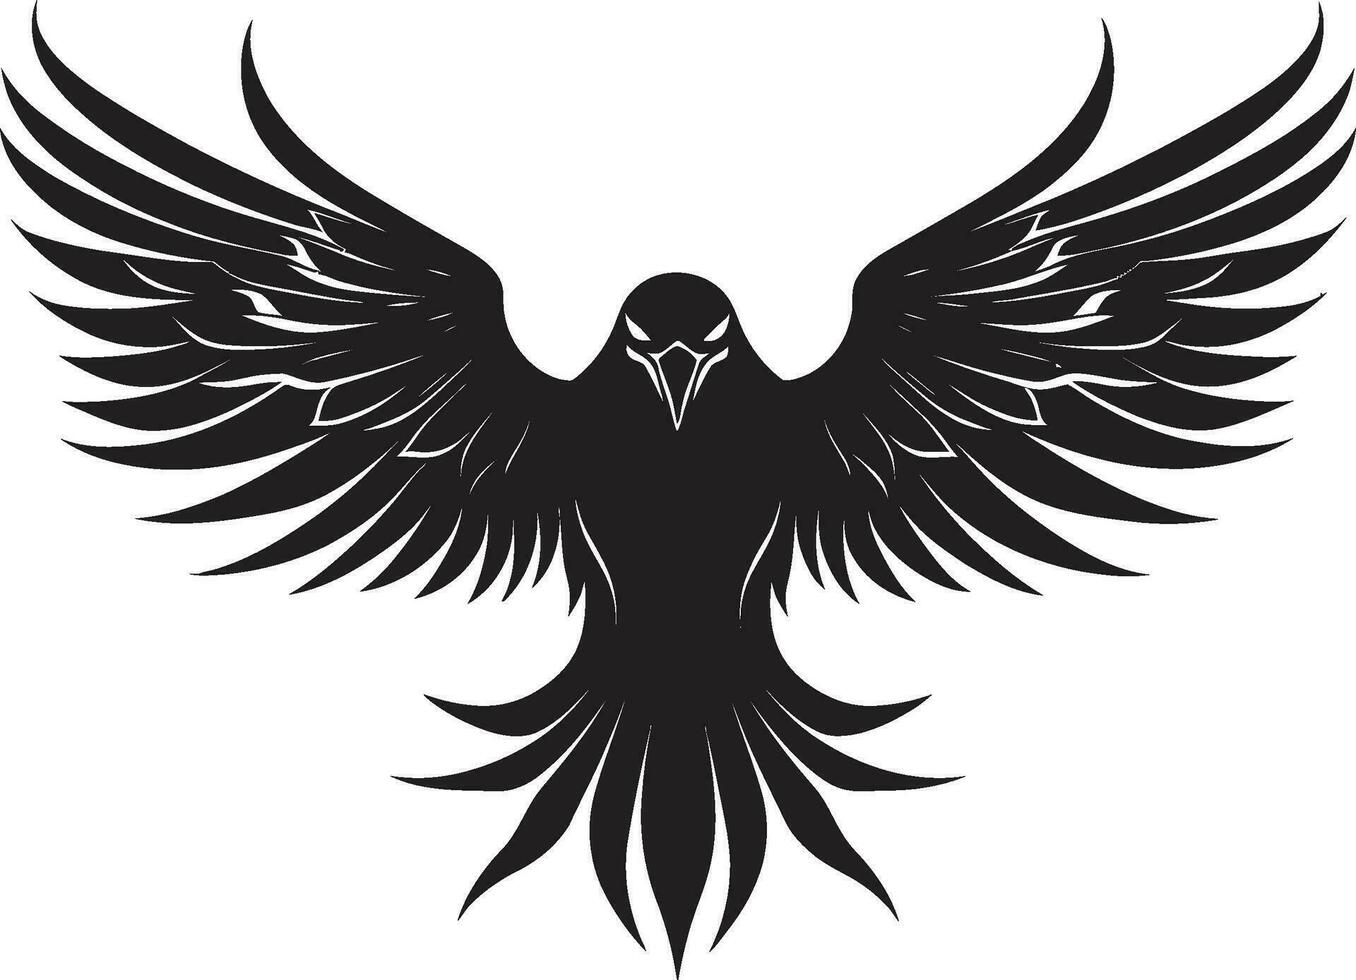 Eagles Flight Vector Icon in Black Powerful Majesty Black Eagle Icon in Vector